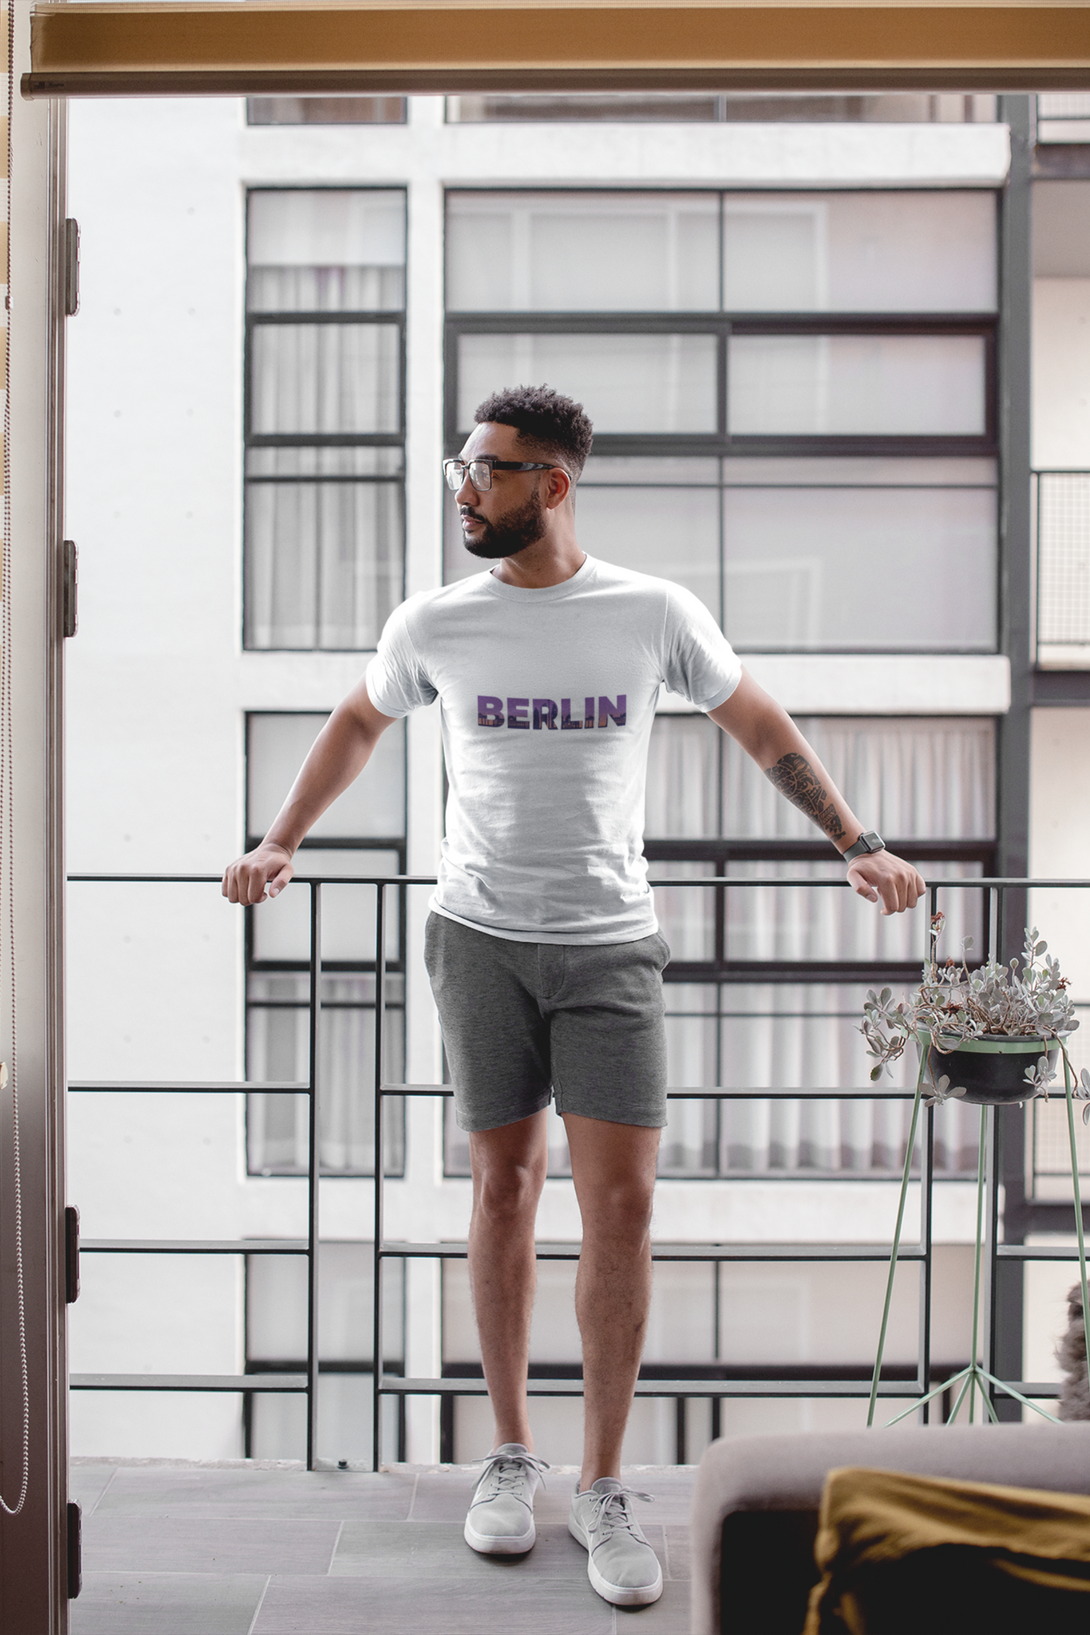 Berlin Skyline Printed T-Shirt For Men - WowWaves